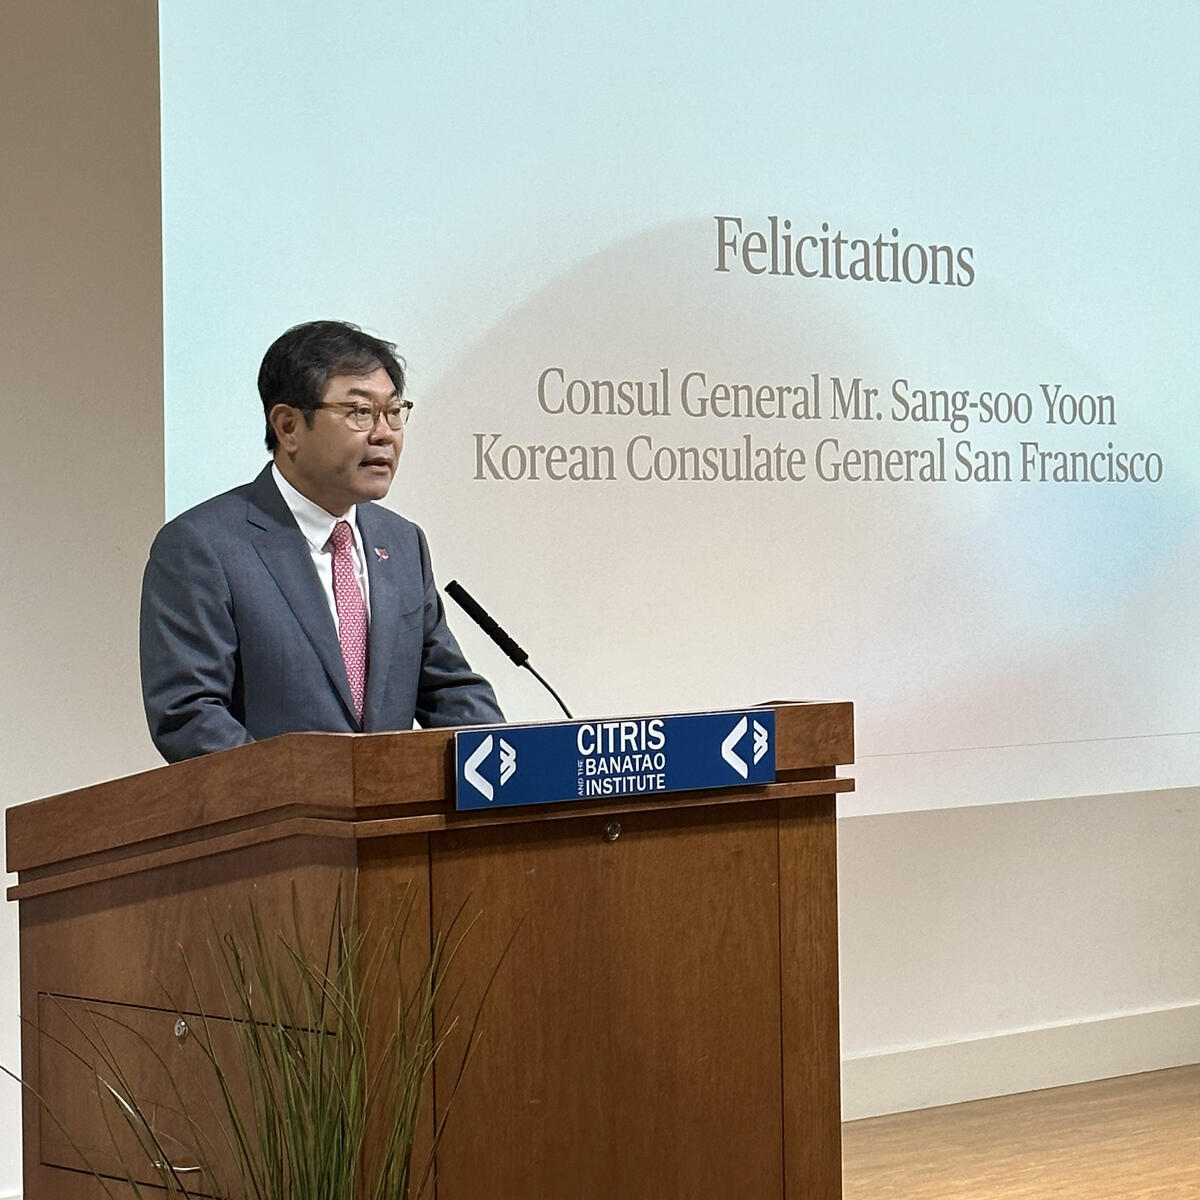 Korean Consul General Sang-Soo Yoon speaks at a podium.